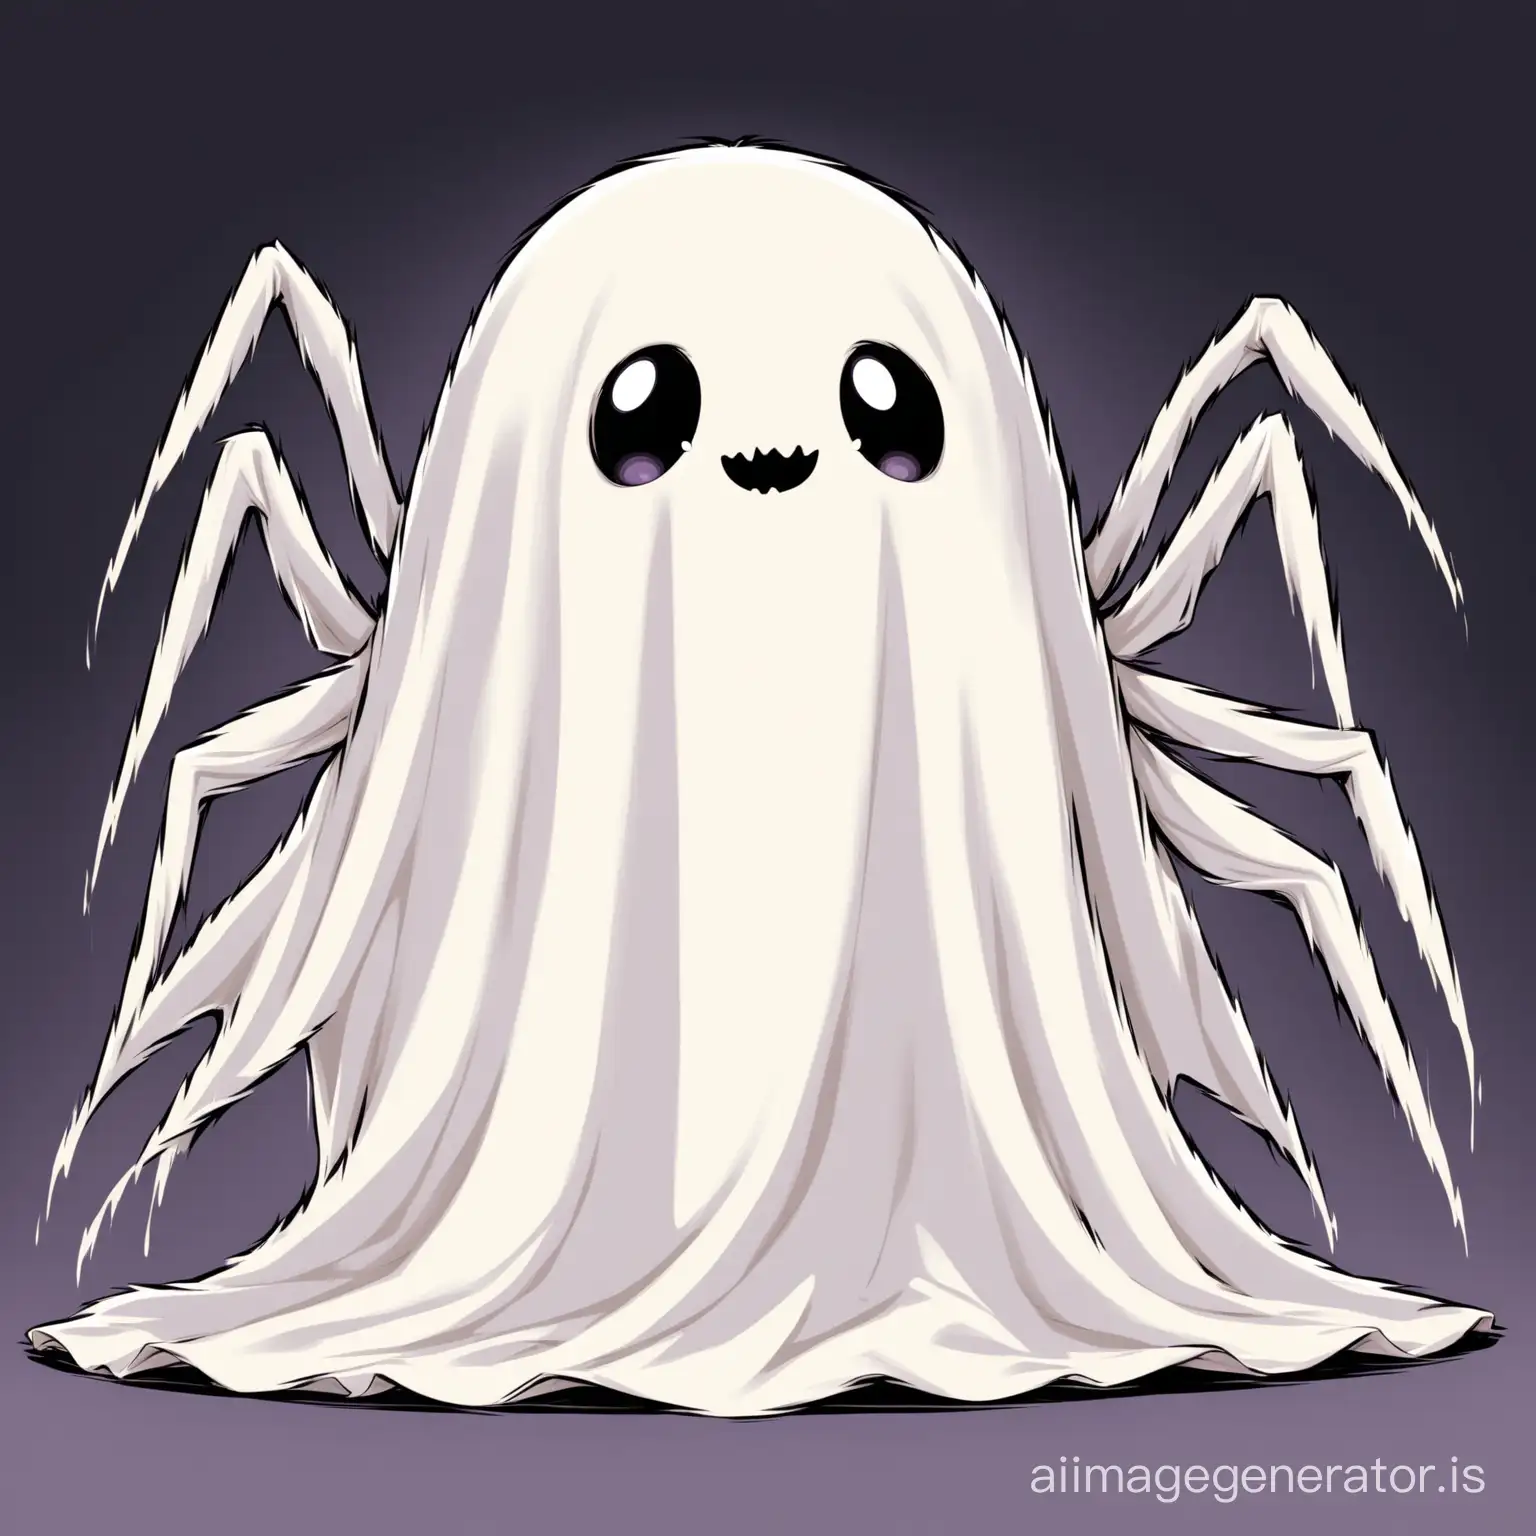 Adorable-Spider-Ghost-Halloween-Costume